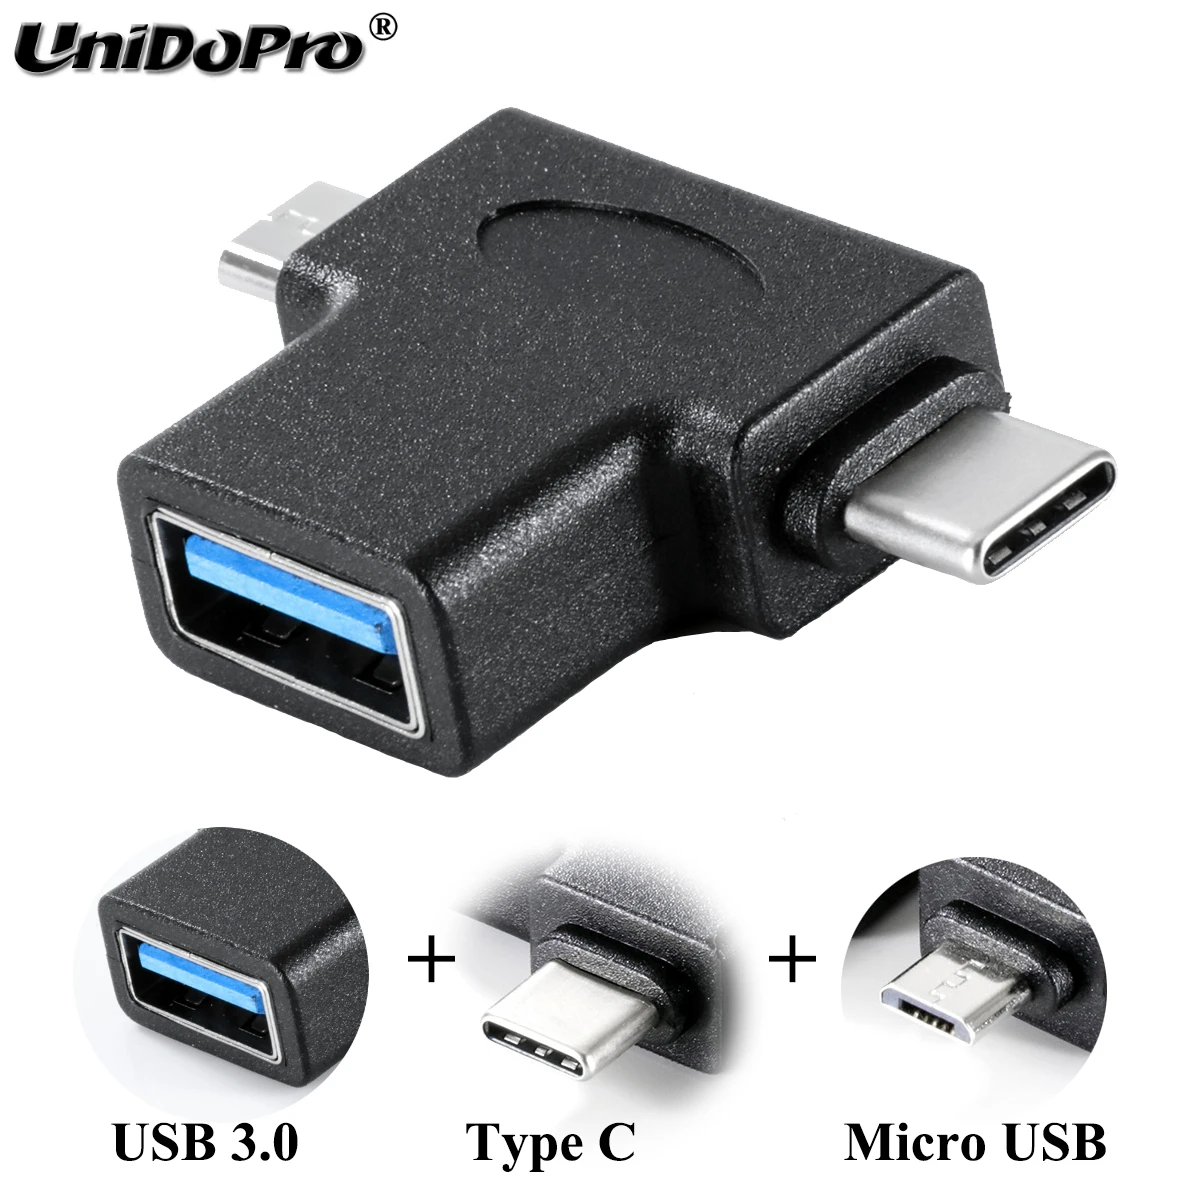 Micro USB OTG adaptador cable para blackberry Passport